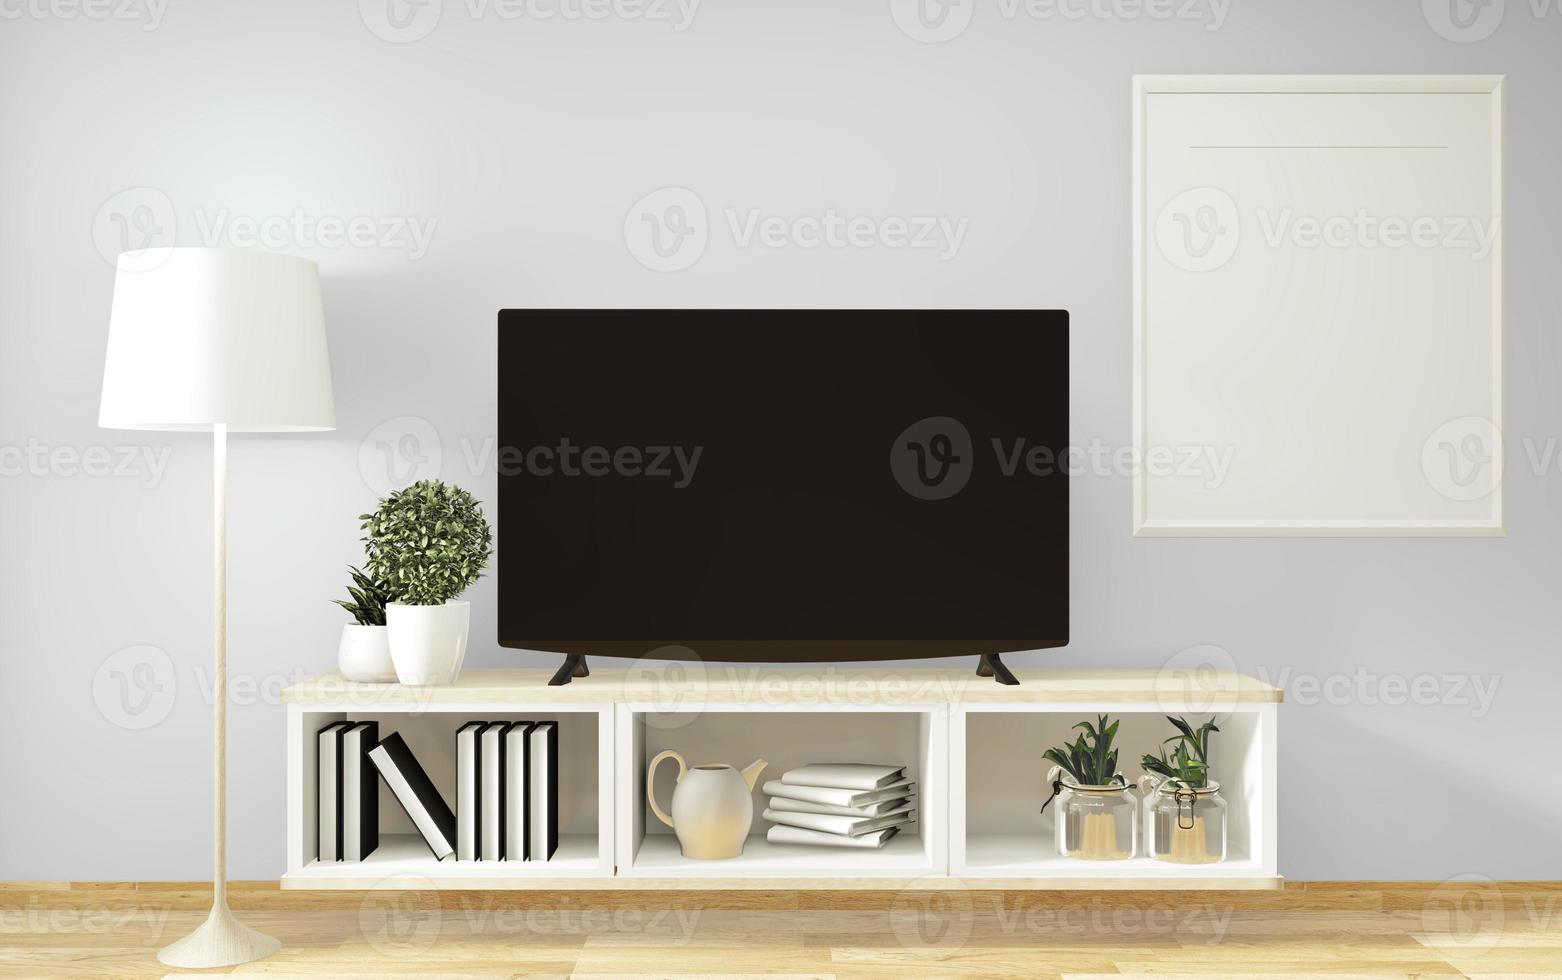 mock-up tv-kast en display met minimaal ontwerp van de kamer en decoraion Japanse stijl. 3D-rendering foto